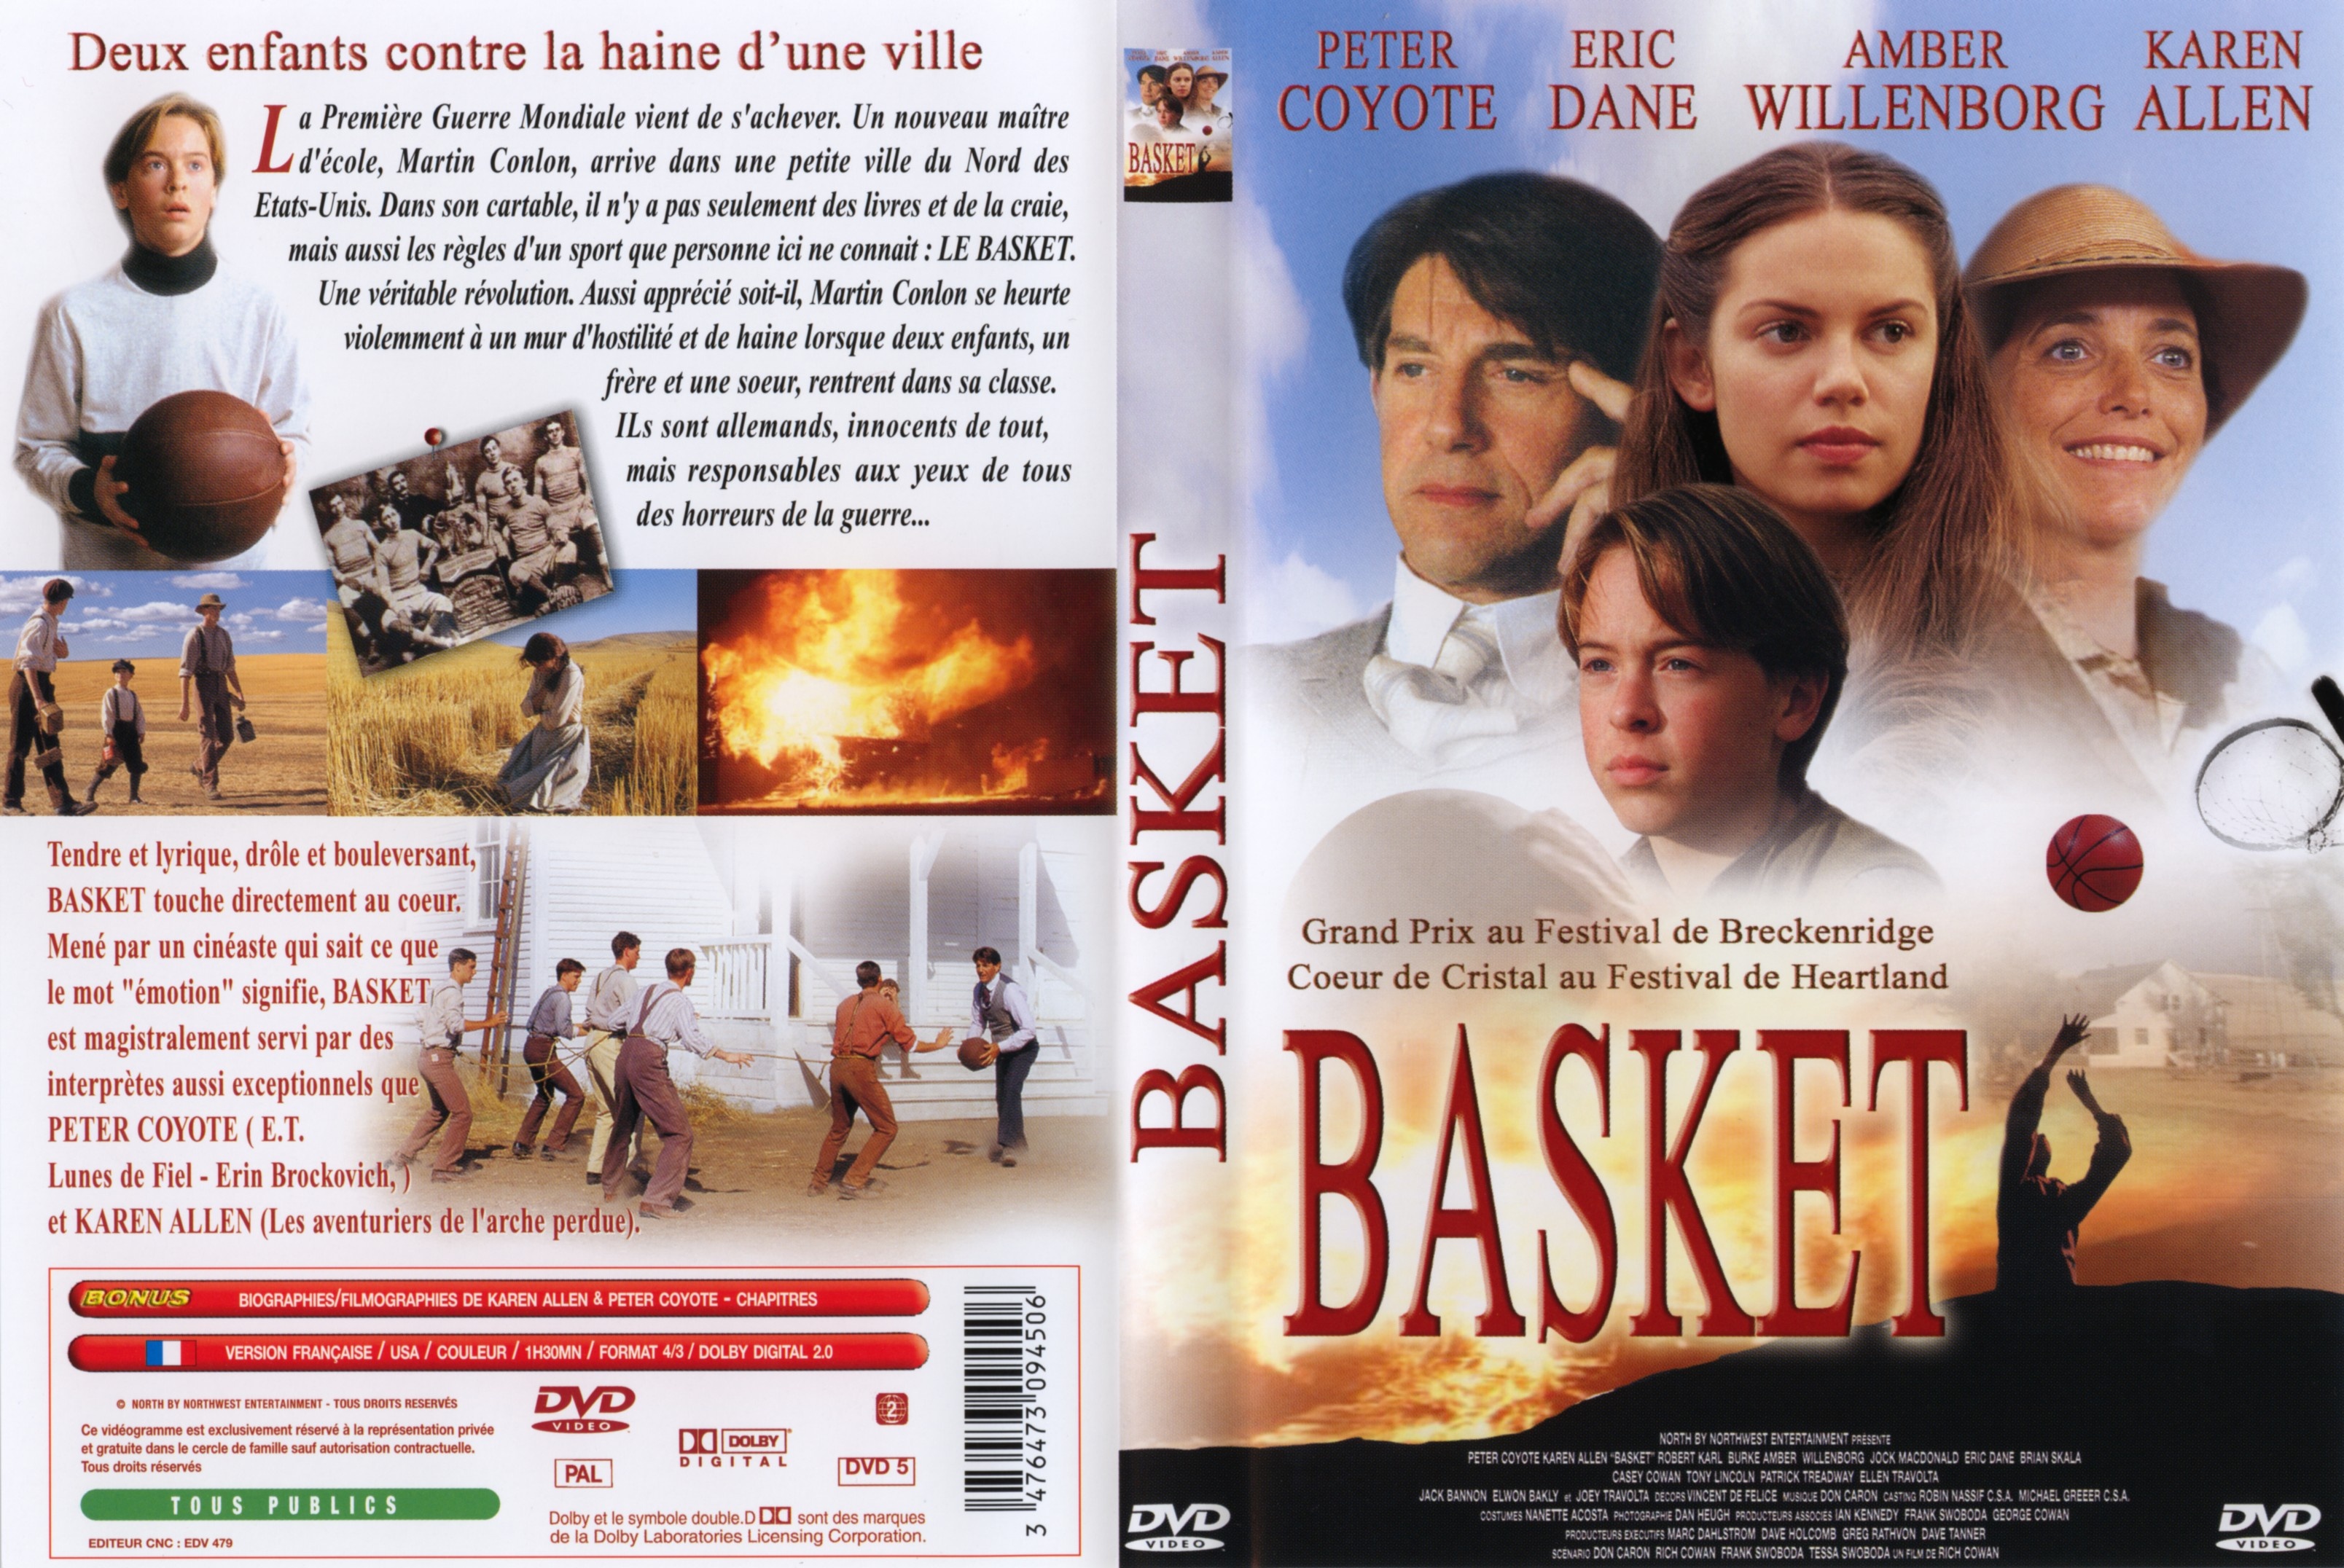 Jaquette DVD Basket